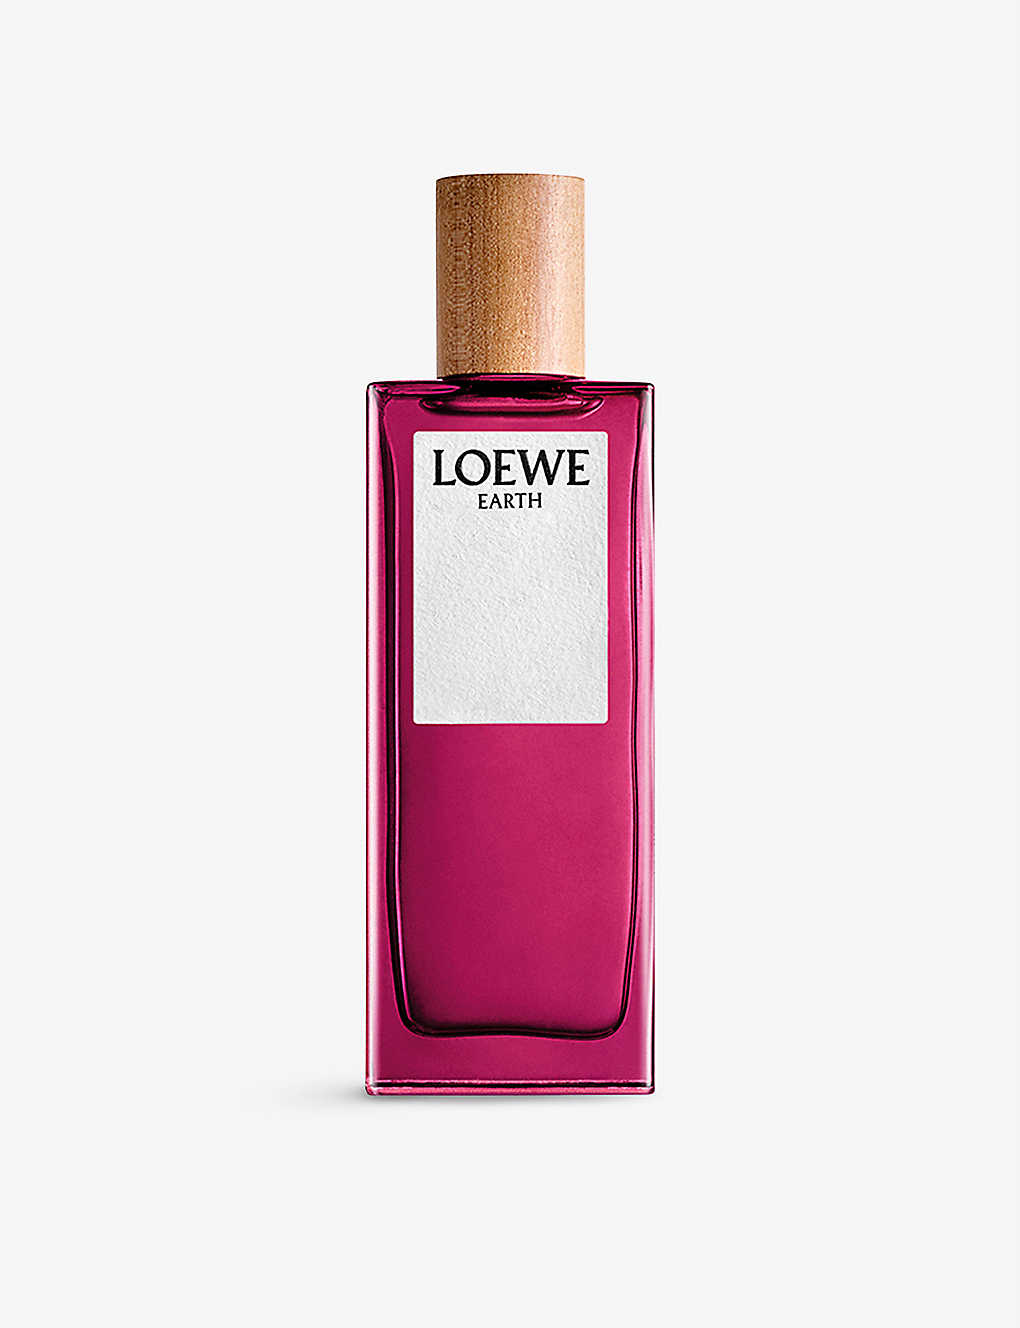 Loewe Earth Eau De Parfum 100ml